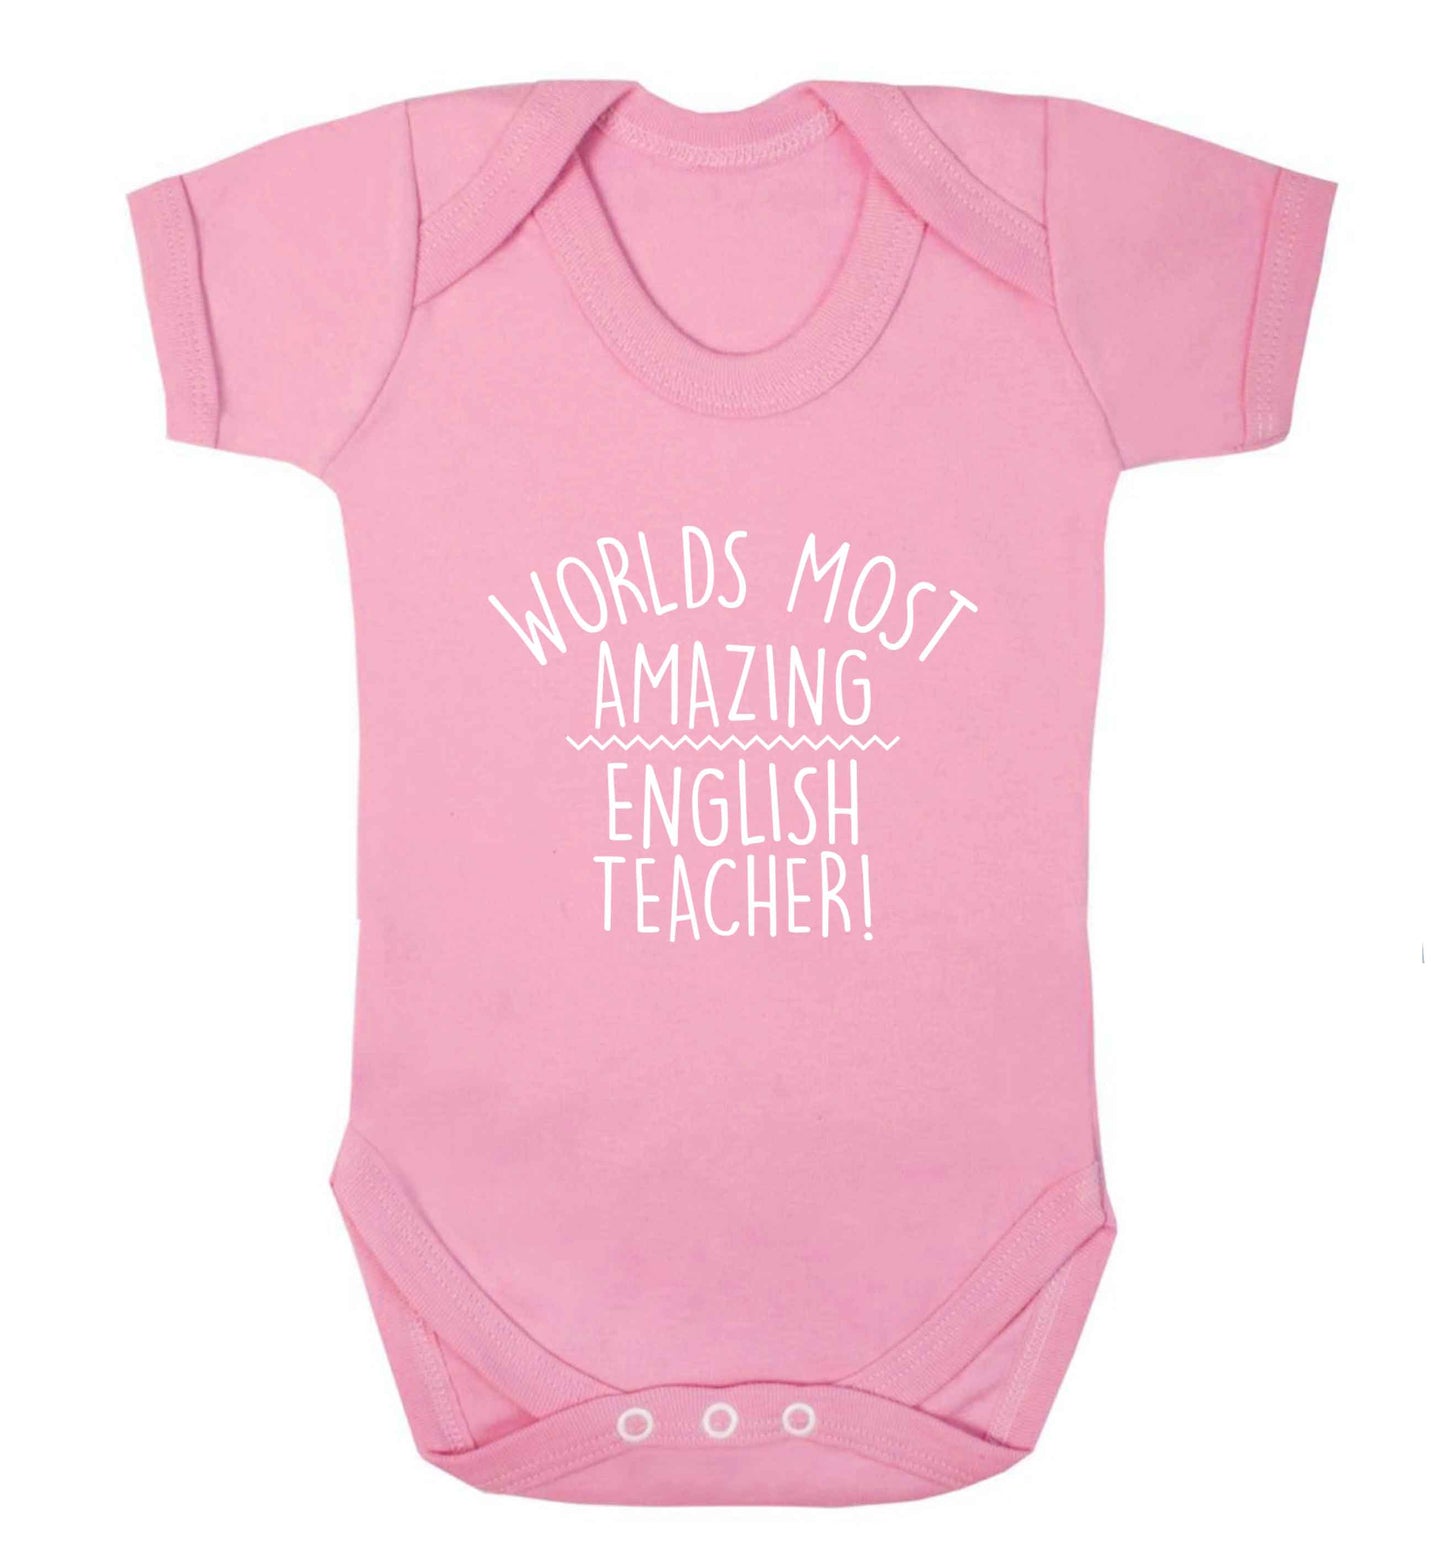 Worlds most amazing English teacher baby vest pale pink 18-24 months